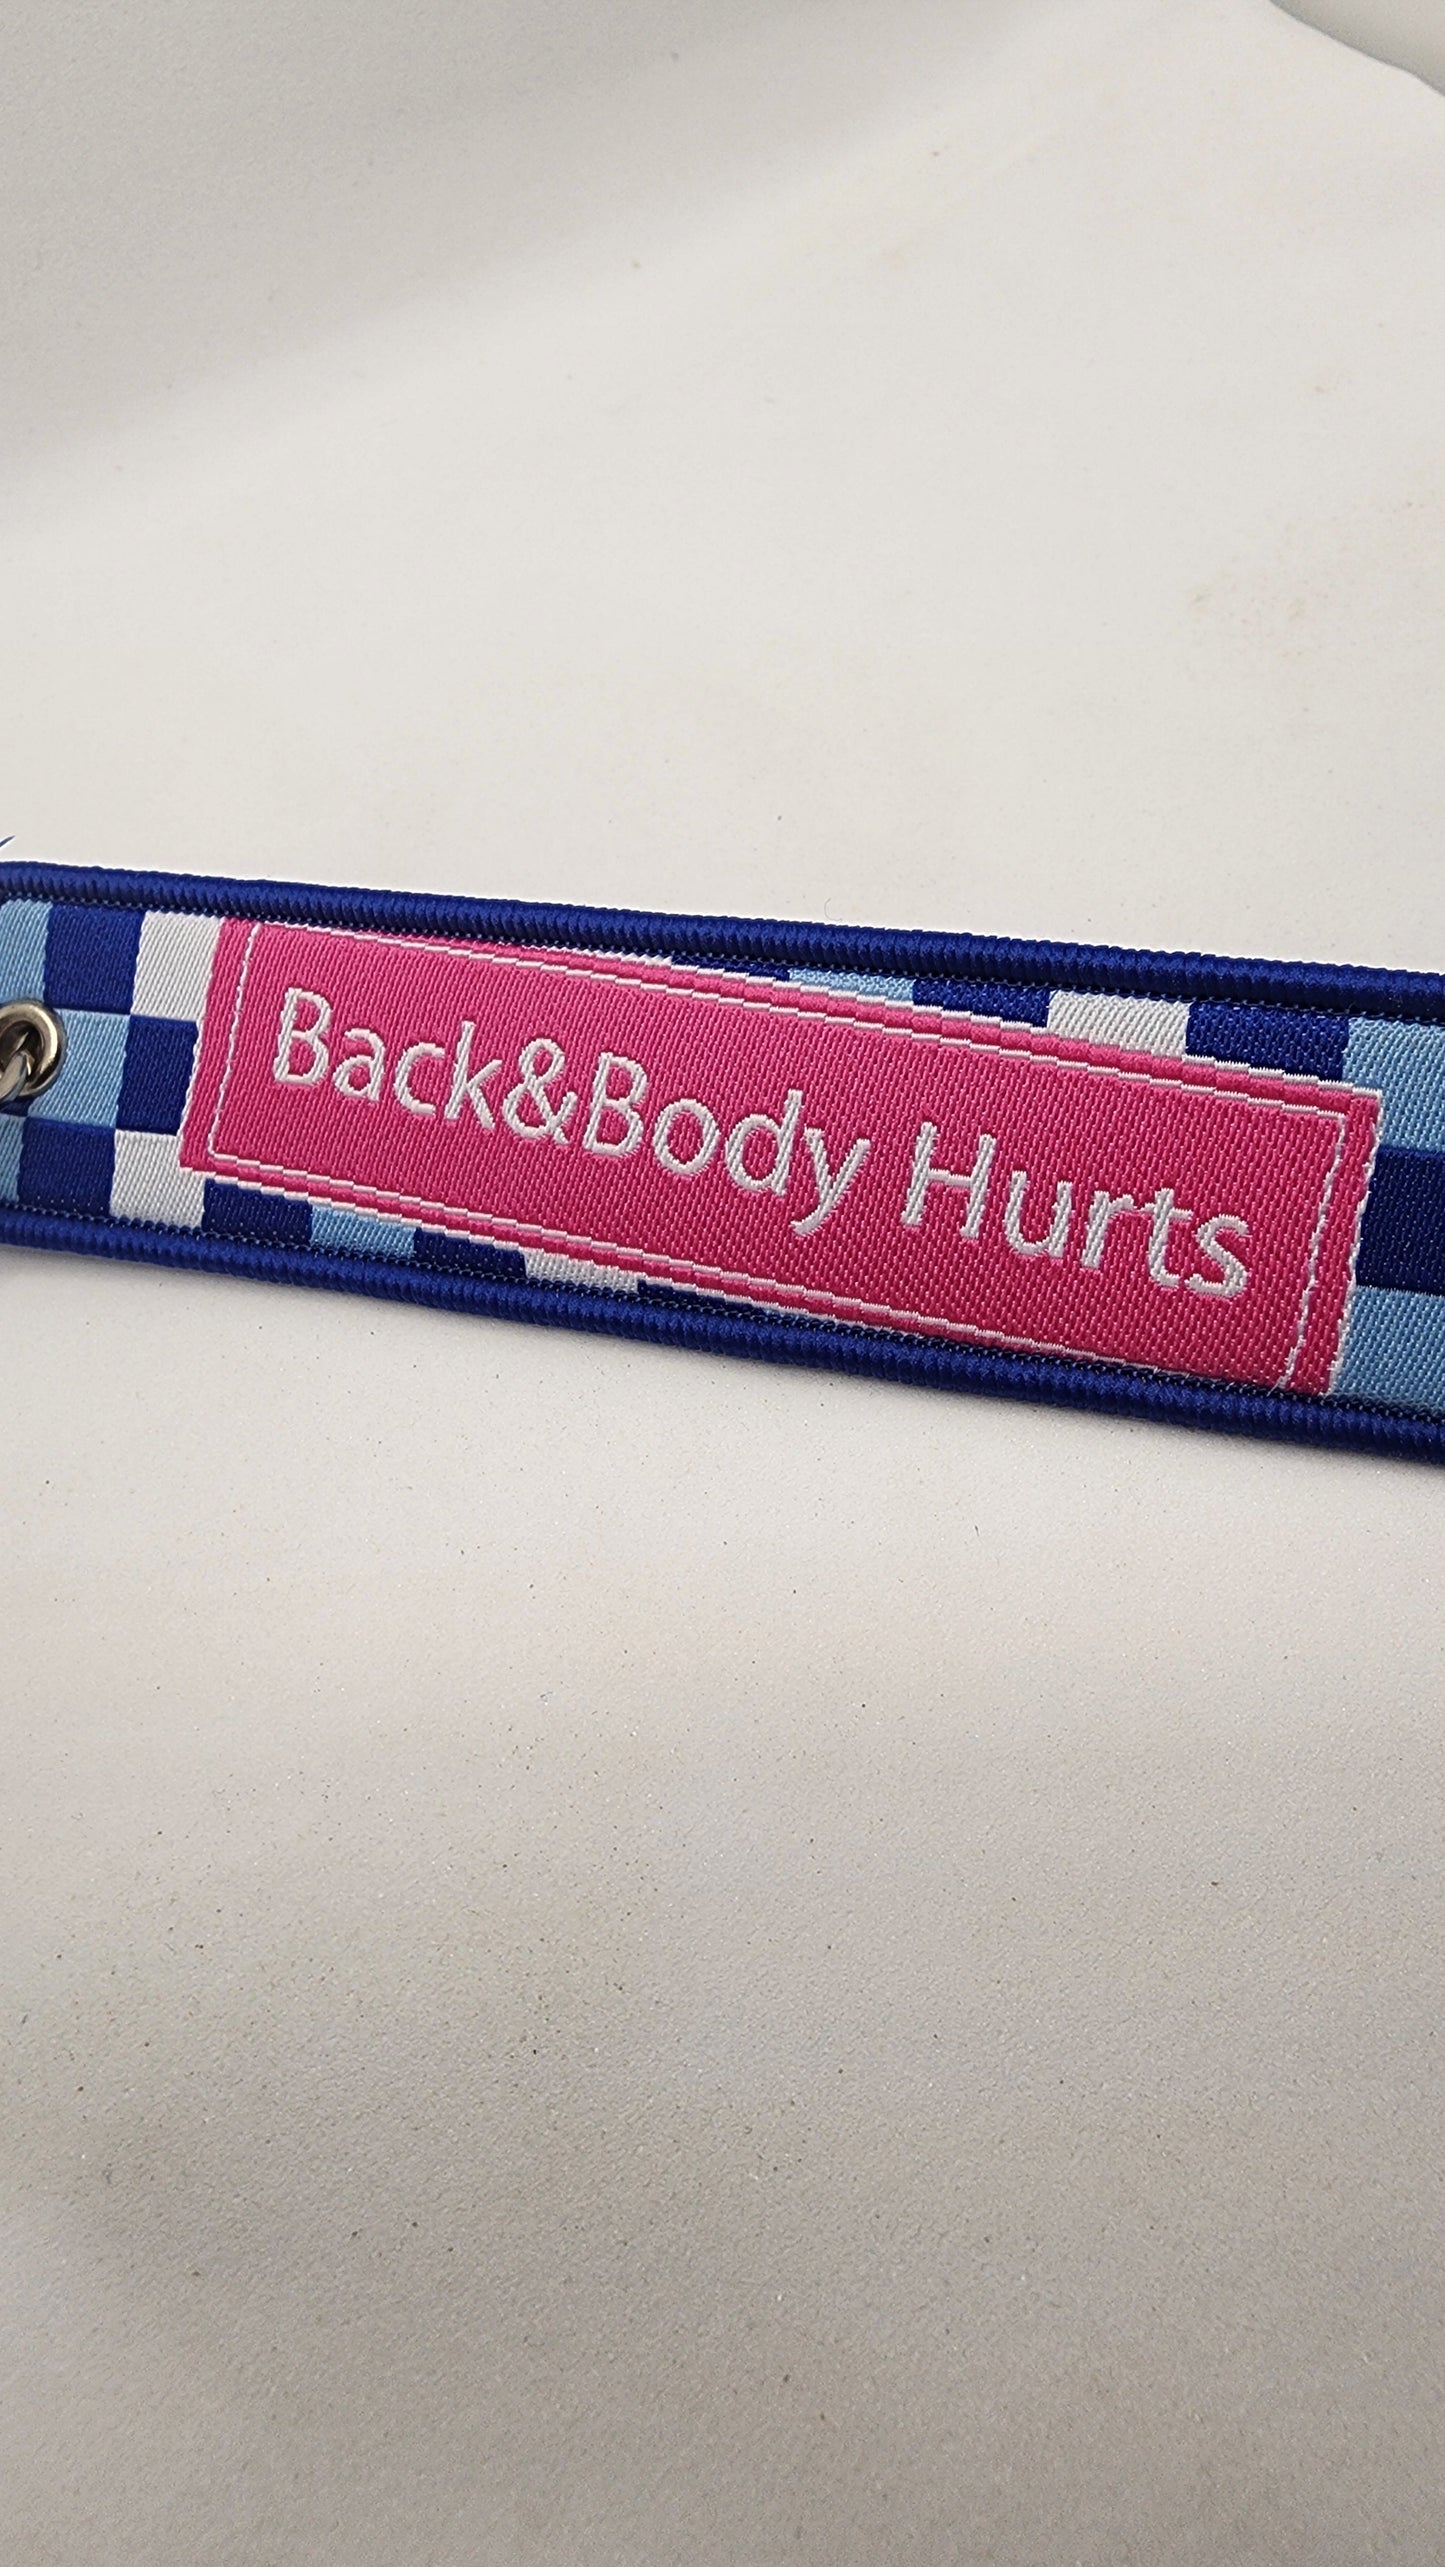 "Back & Body Hurts" Bag Tag